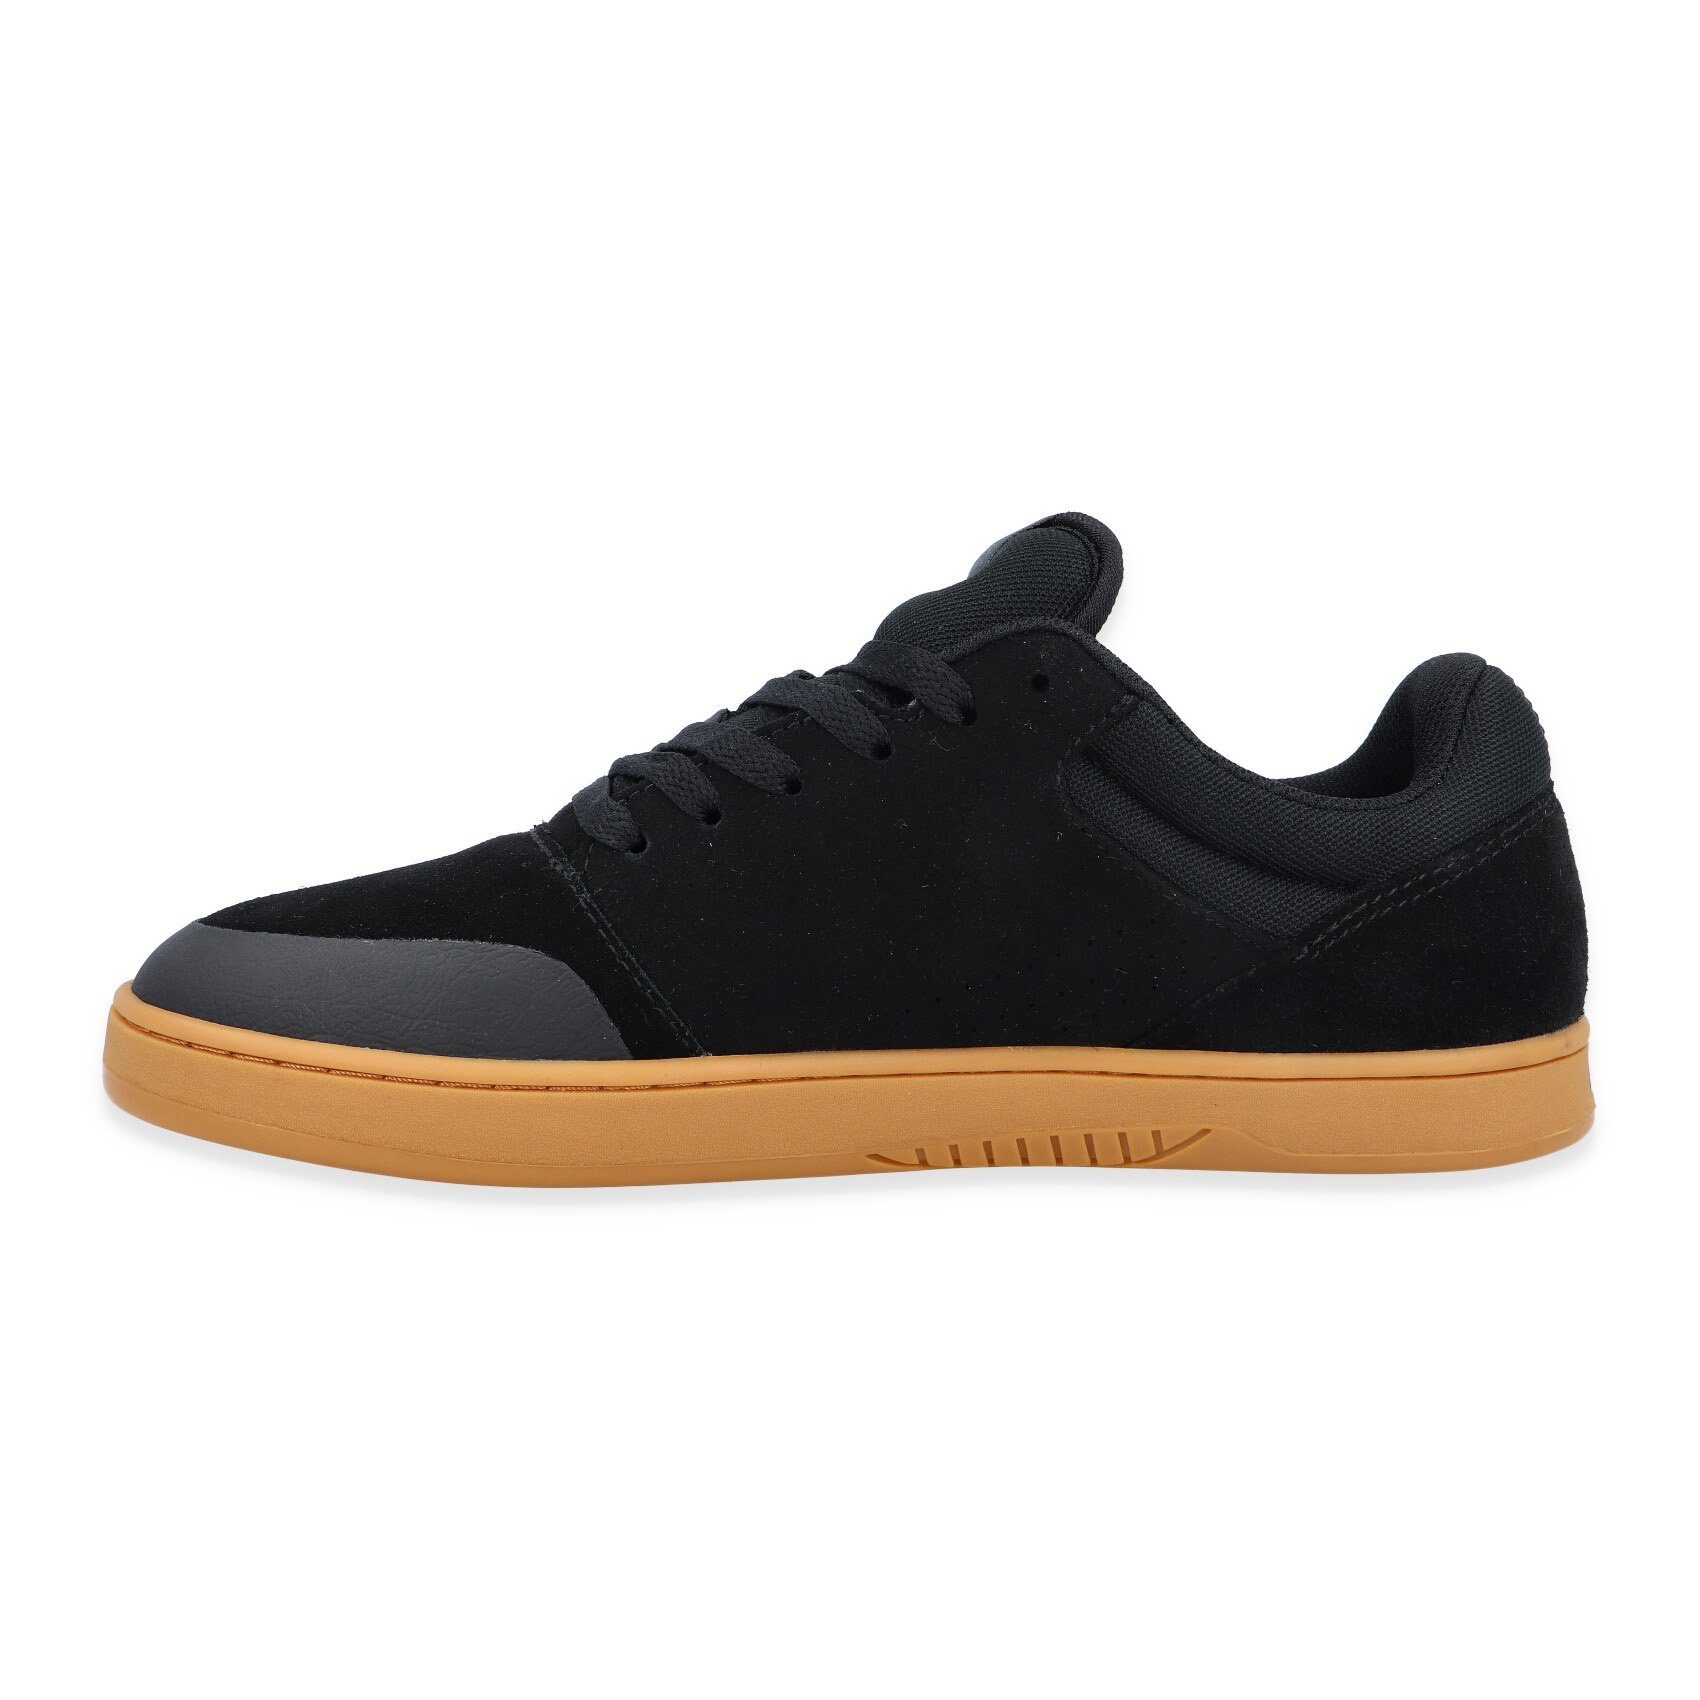 grey/gum - black/dark etnies Marana Sneaker